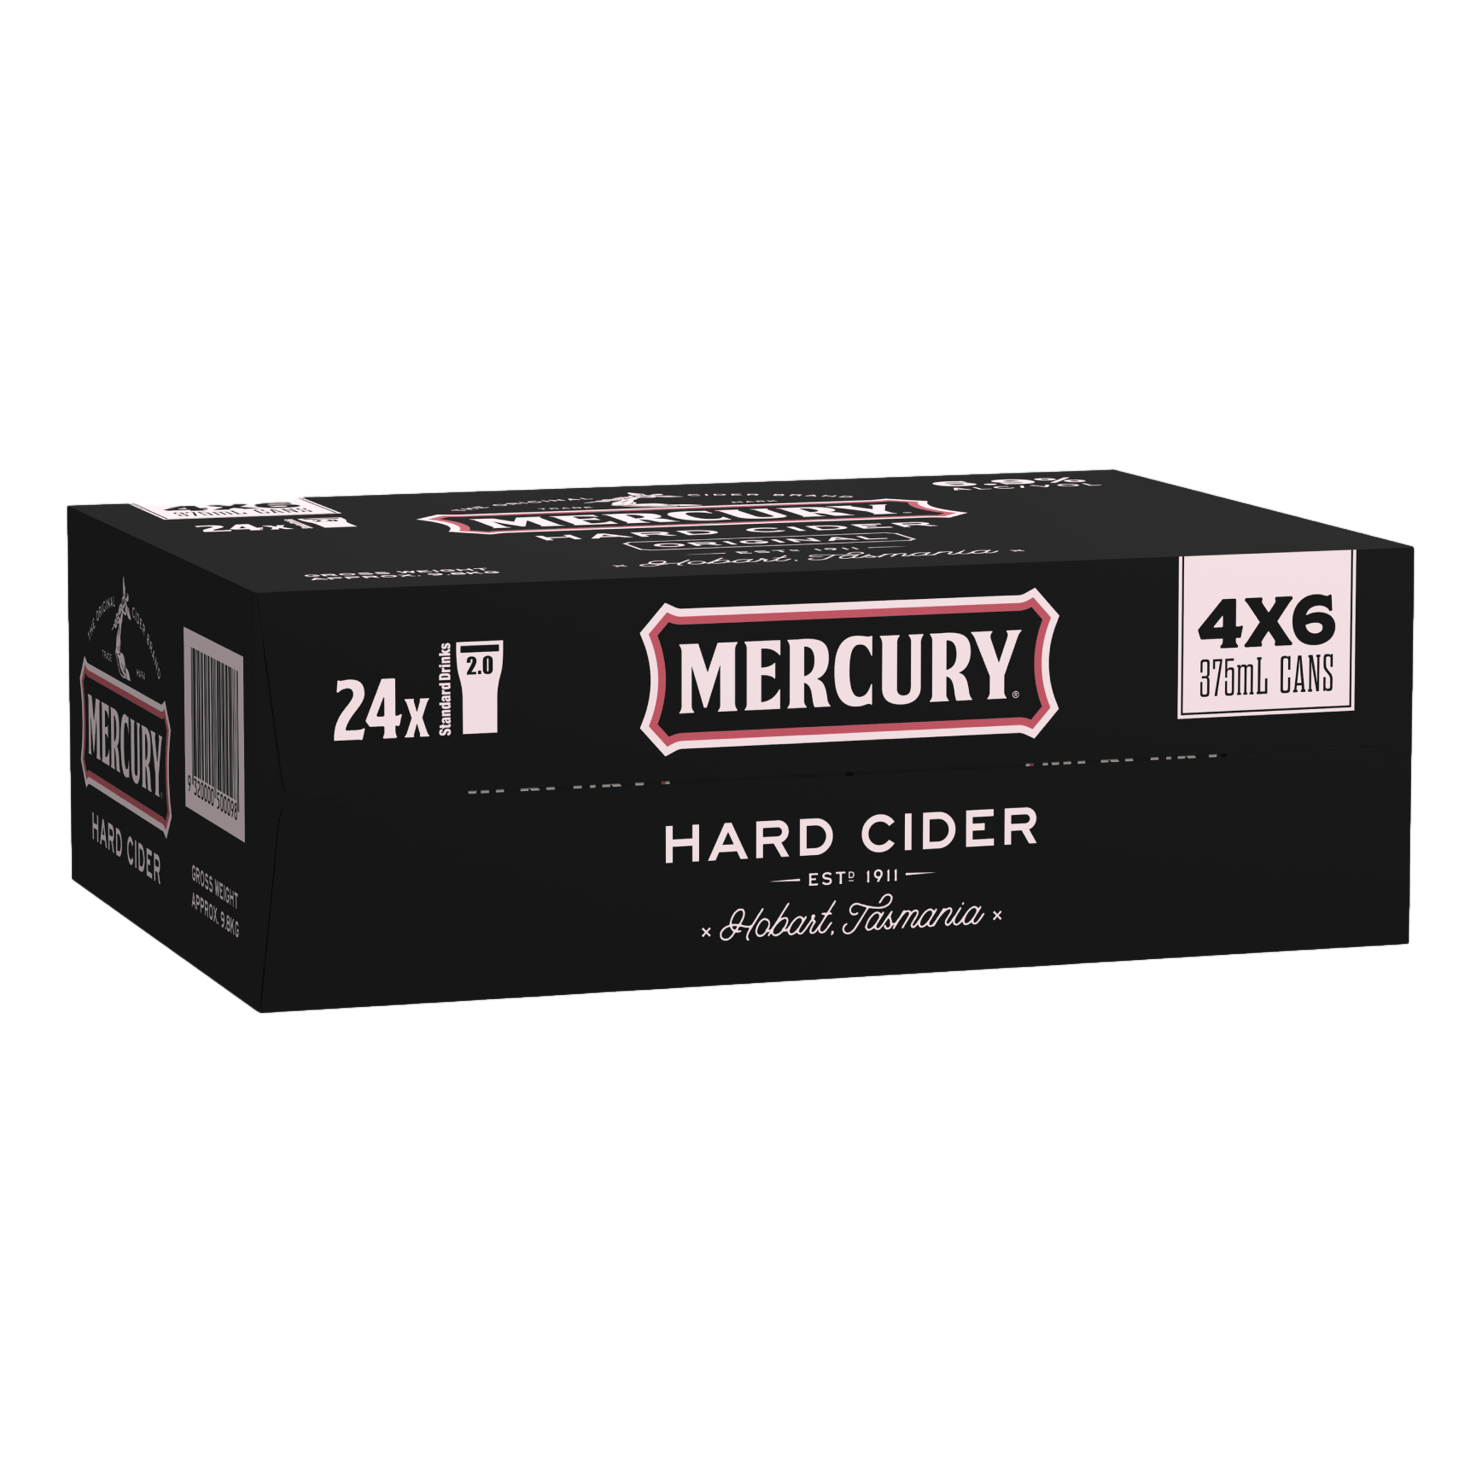 Mercury Hard Cider Original 6.9% 375ml Can Case of 24